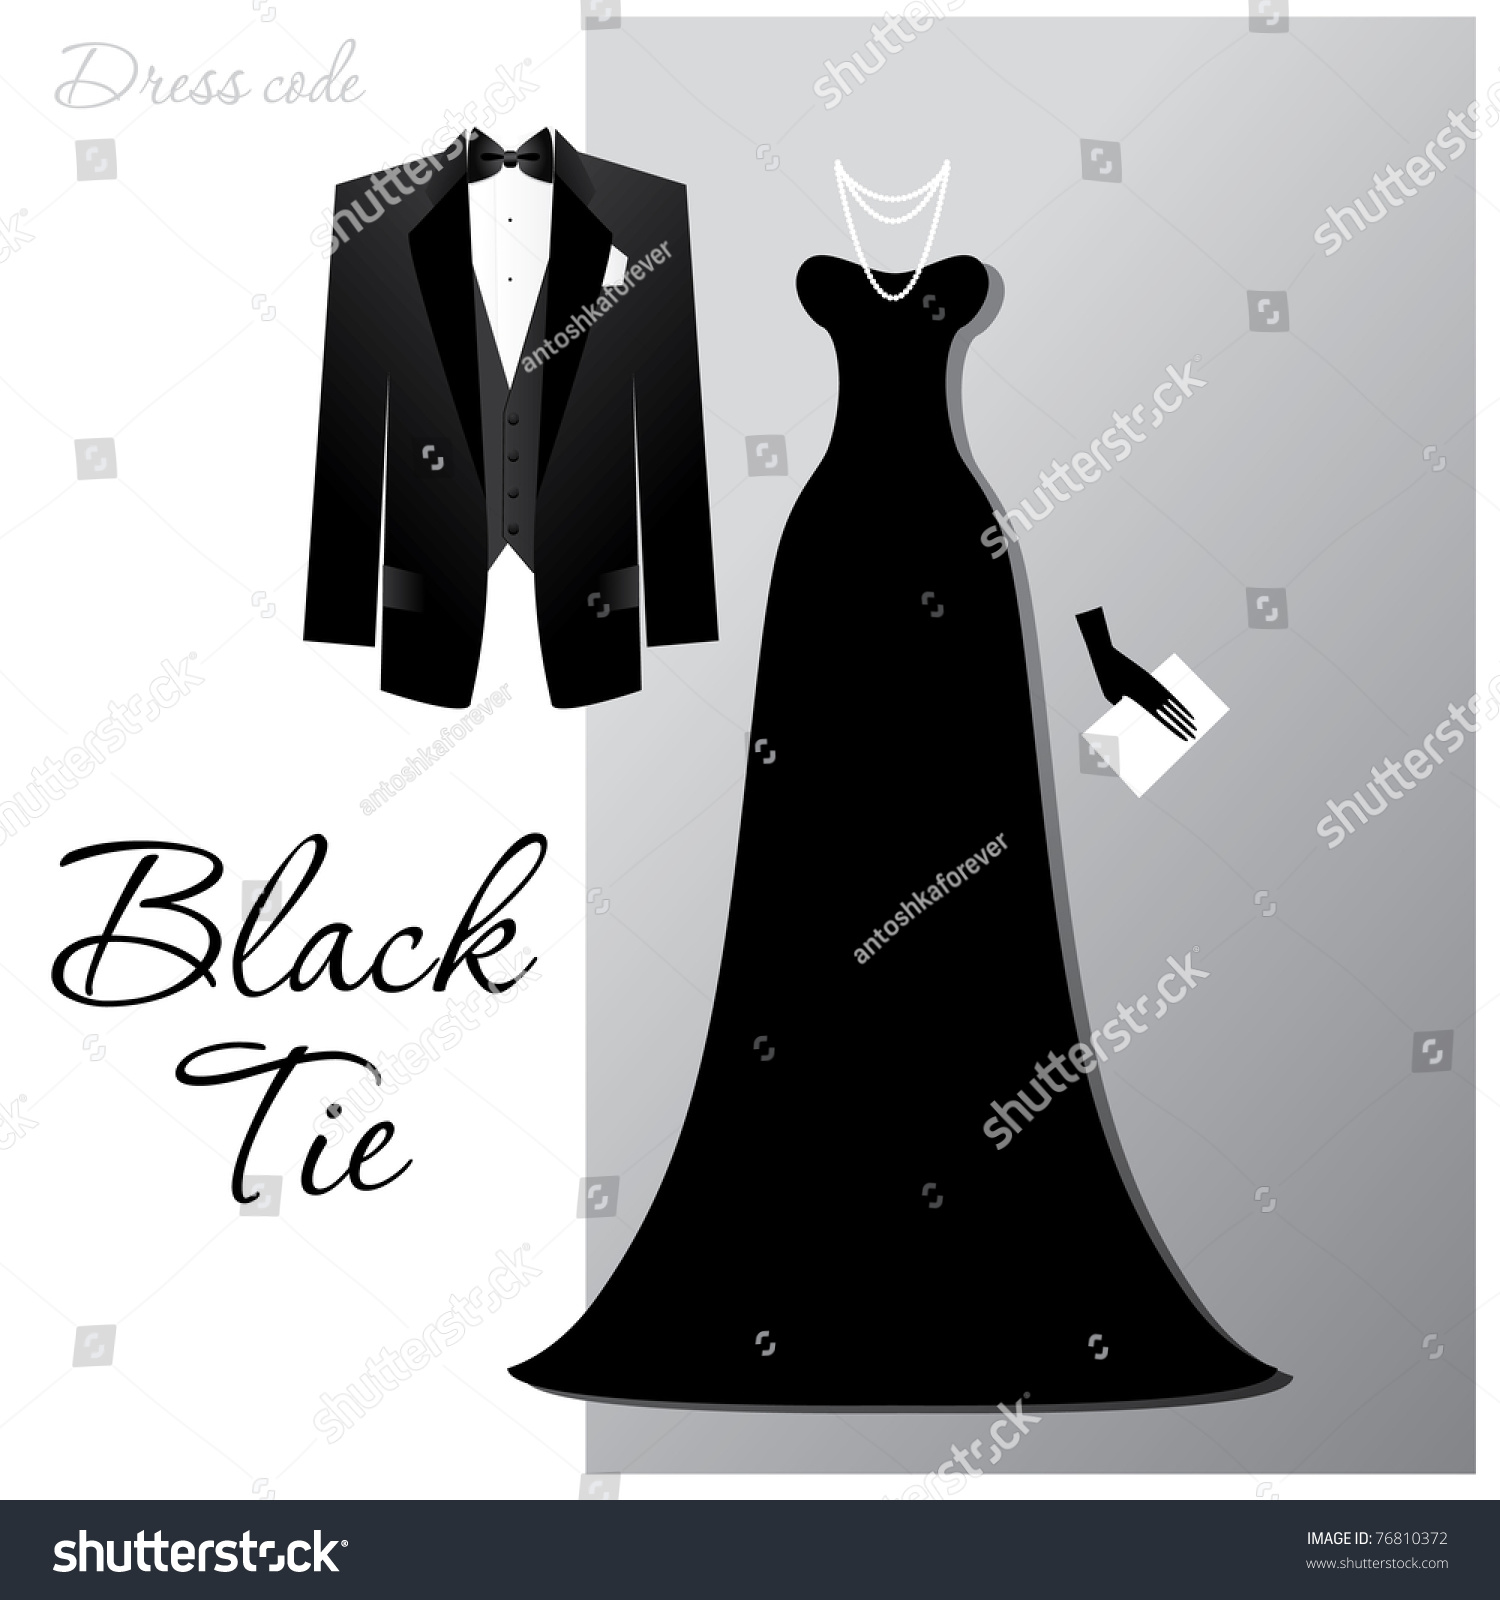 black and white ball dress code